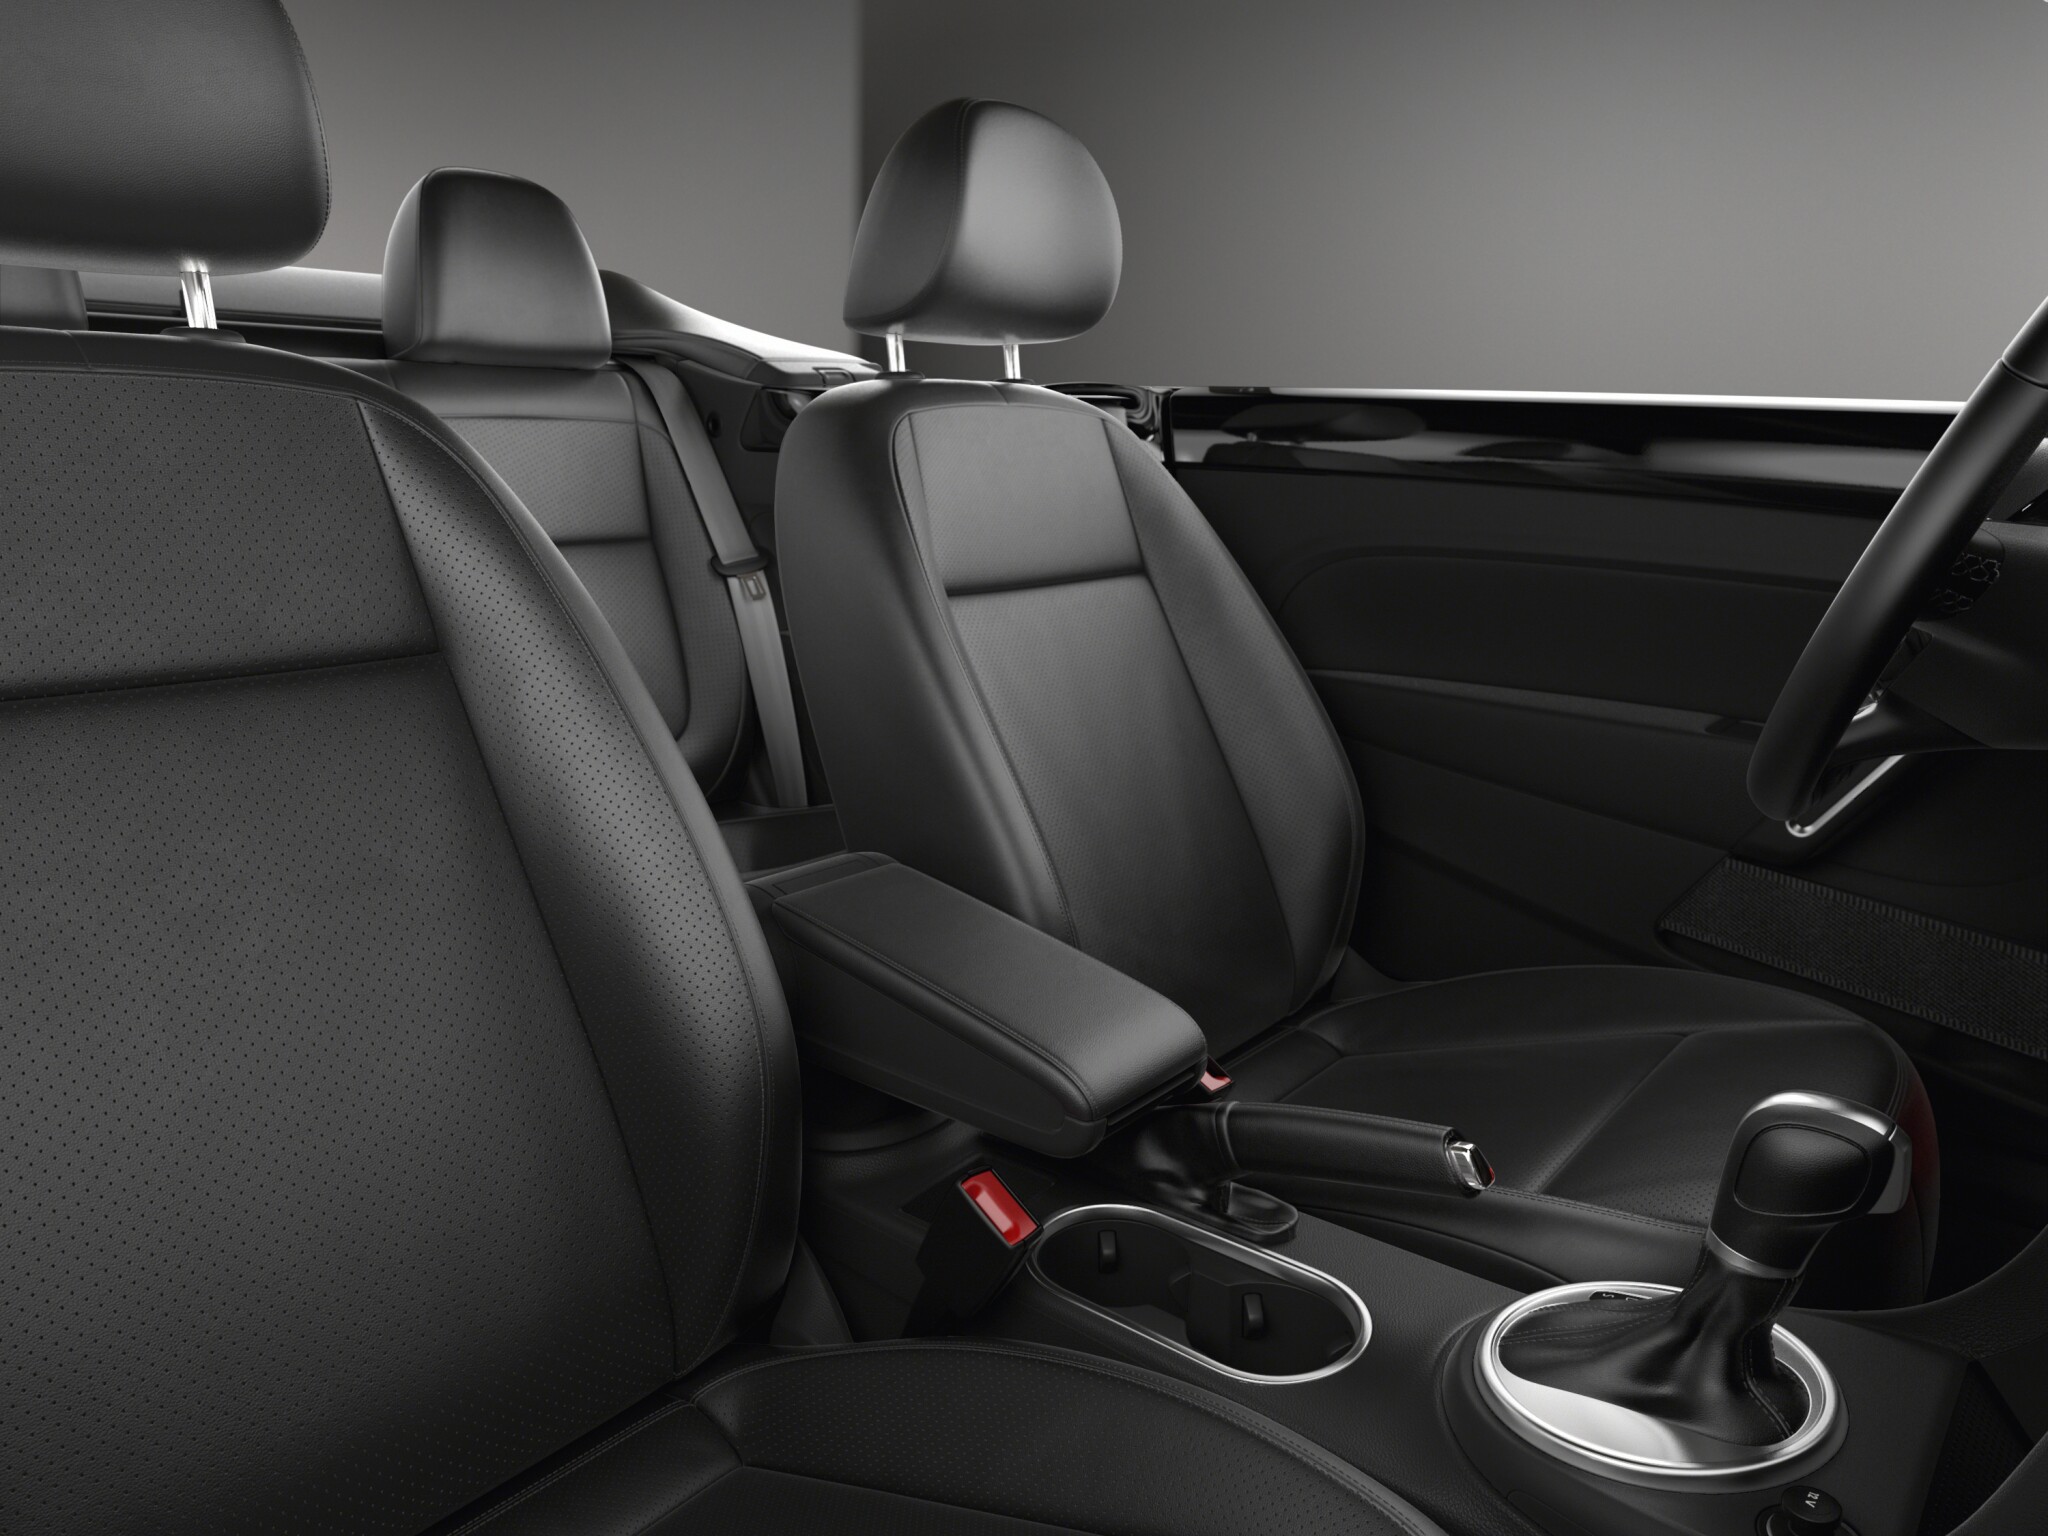 Volkswagen Beetle Convertinble 1.8T SE interior front seat view